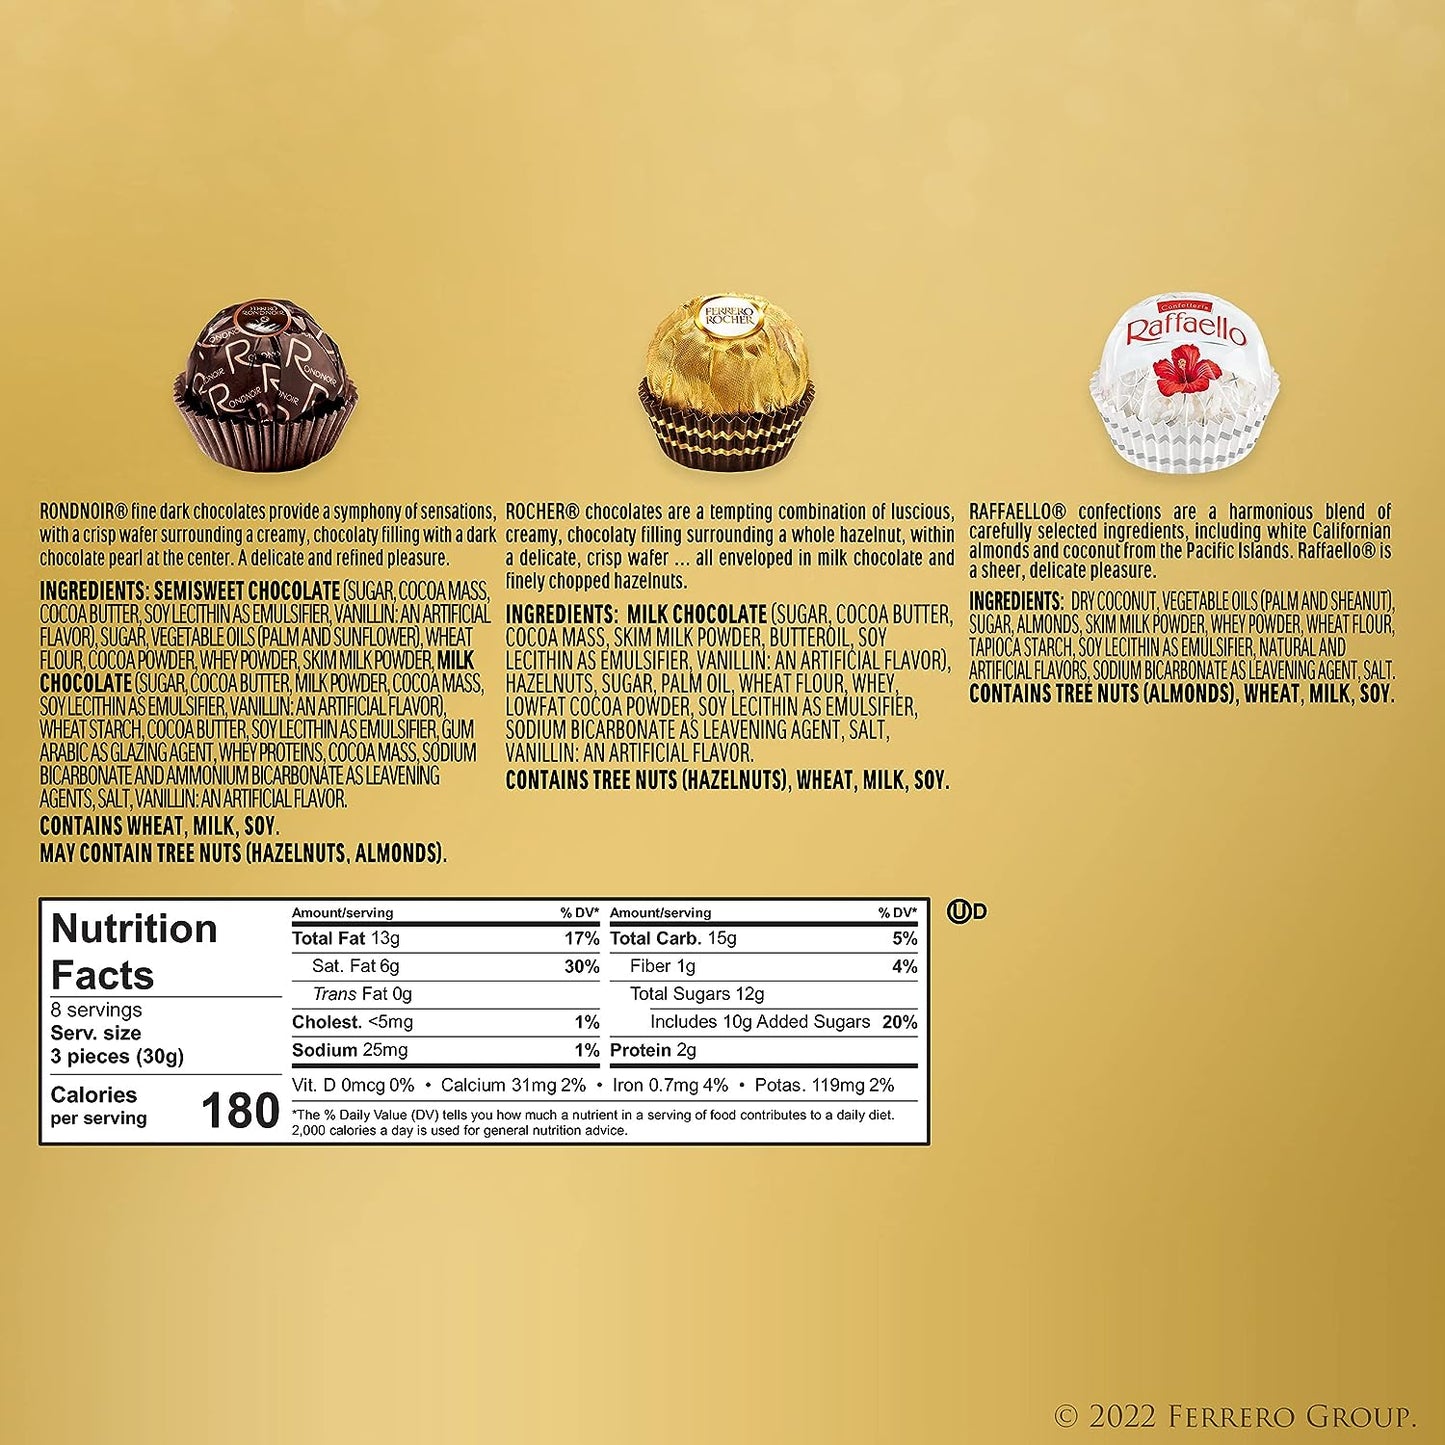 Ferrero Collection, 24 Count, Premium Gourmet Assorted Hazelnut Milk Chocolate, Dark Chocolate And Coconut Chocolates, Luxury Chocolate Holiday Gift Box